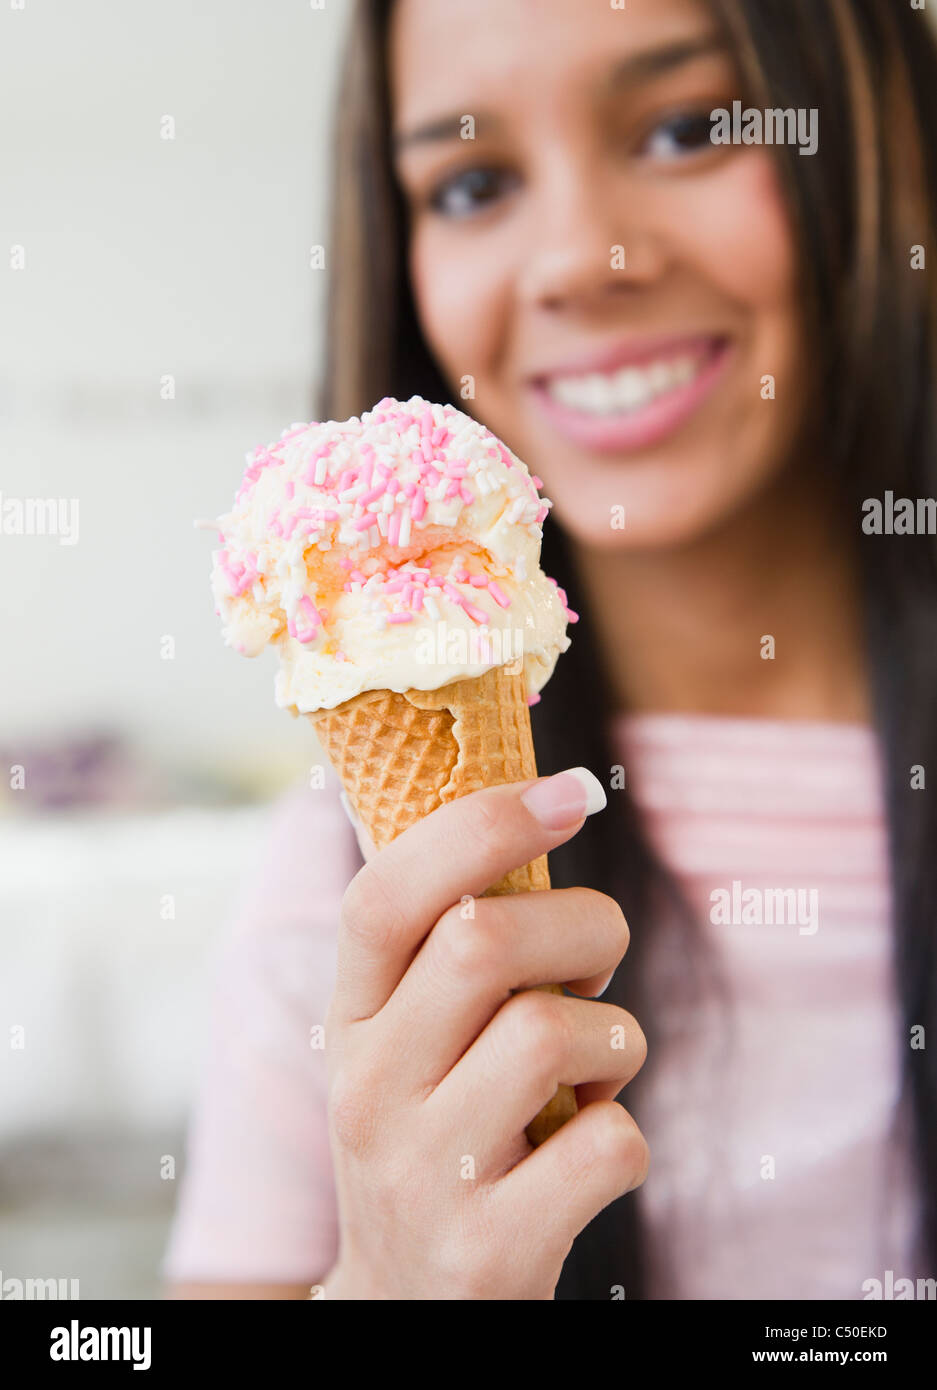 Hispanic teenager eating ice cream cone Stock Photo